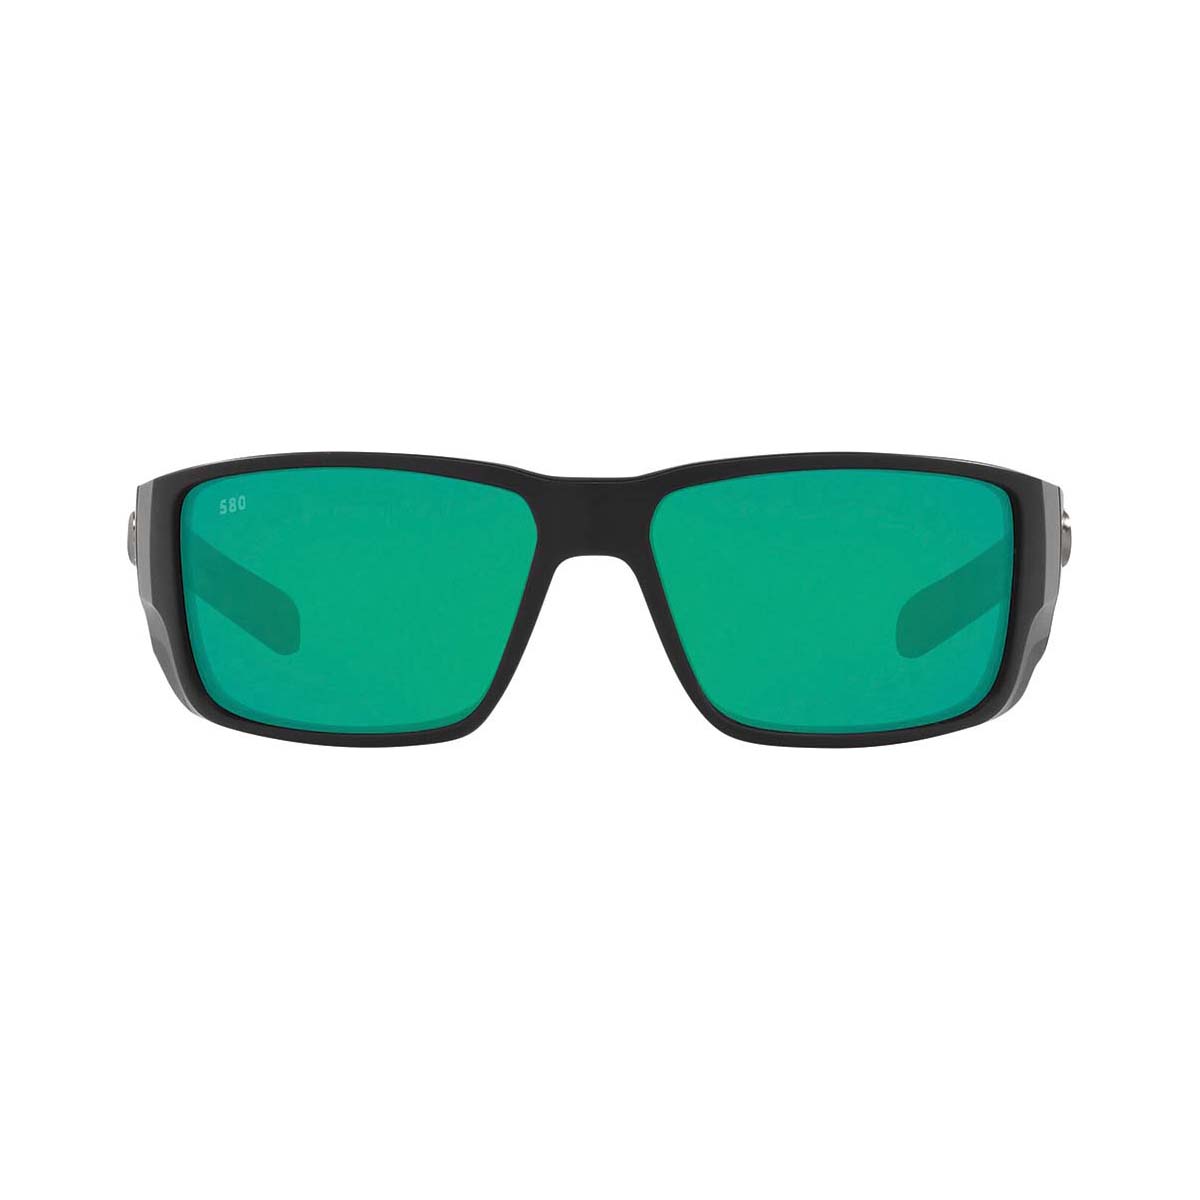 Costa Blackfin Pro Men's Sunglasses Black with Green Lens